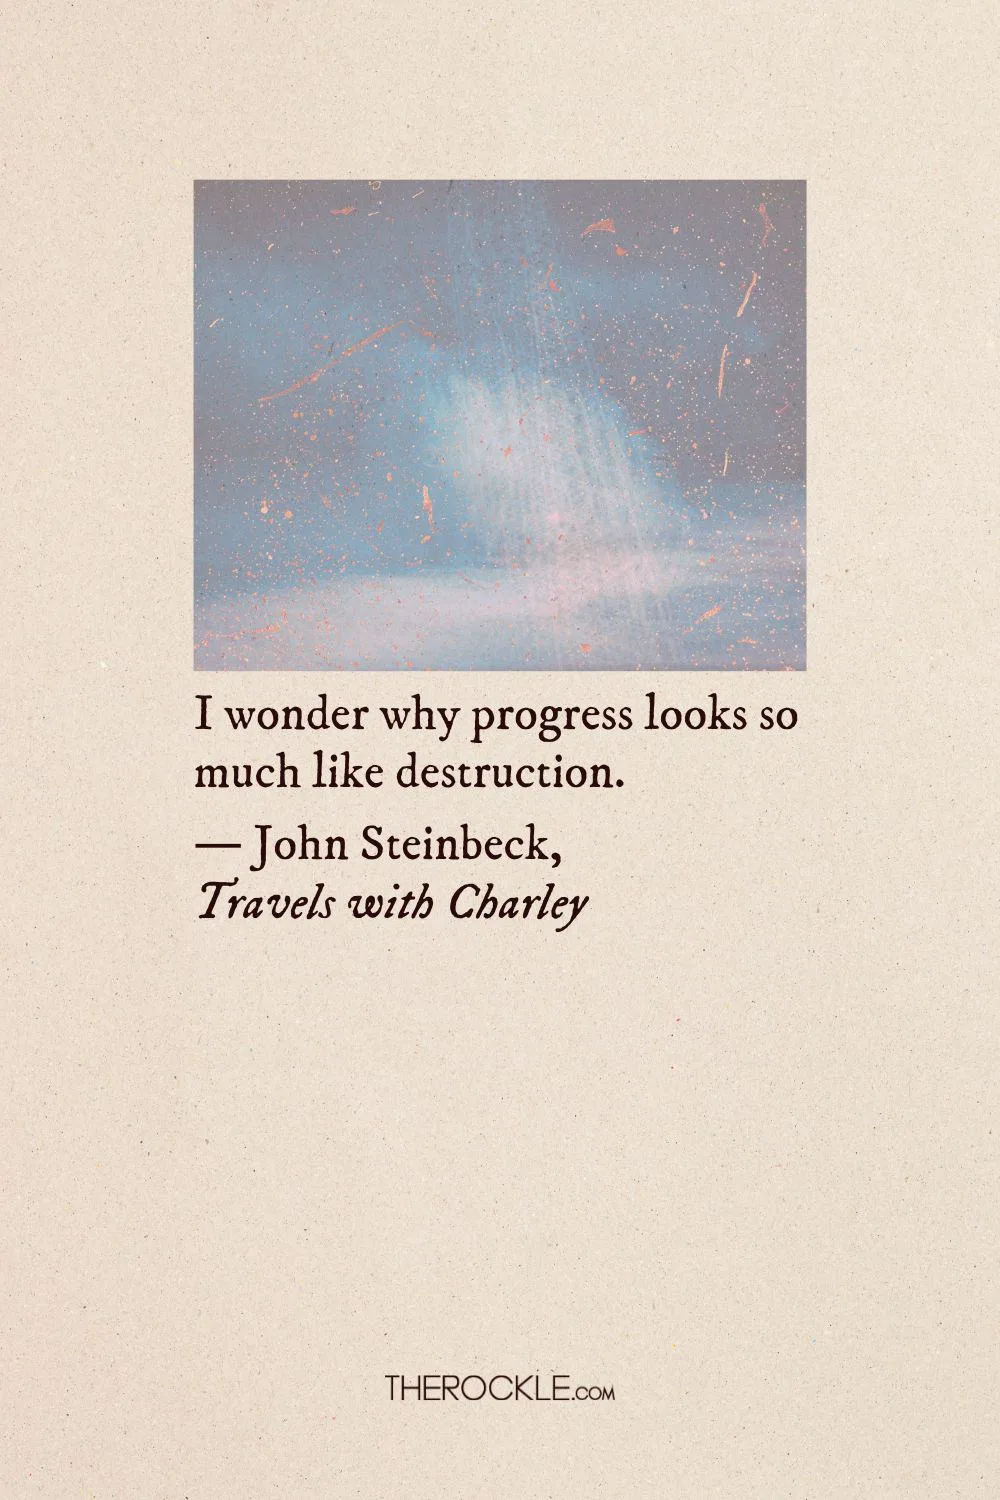 Steinbeck on progress and destruction